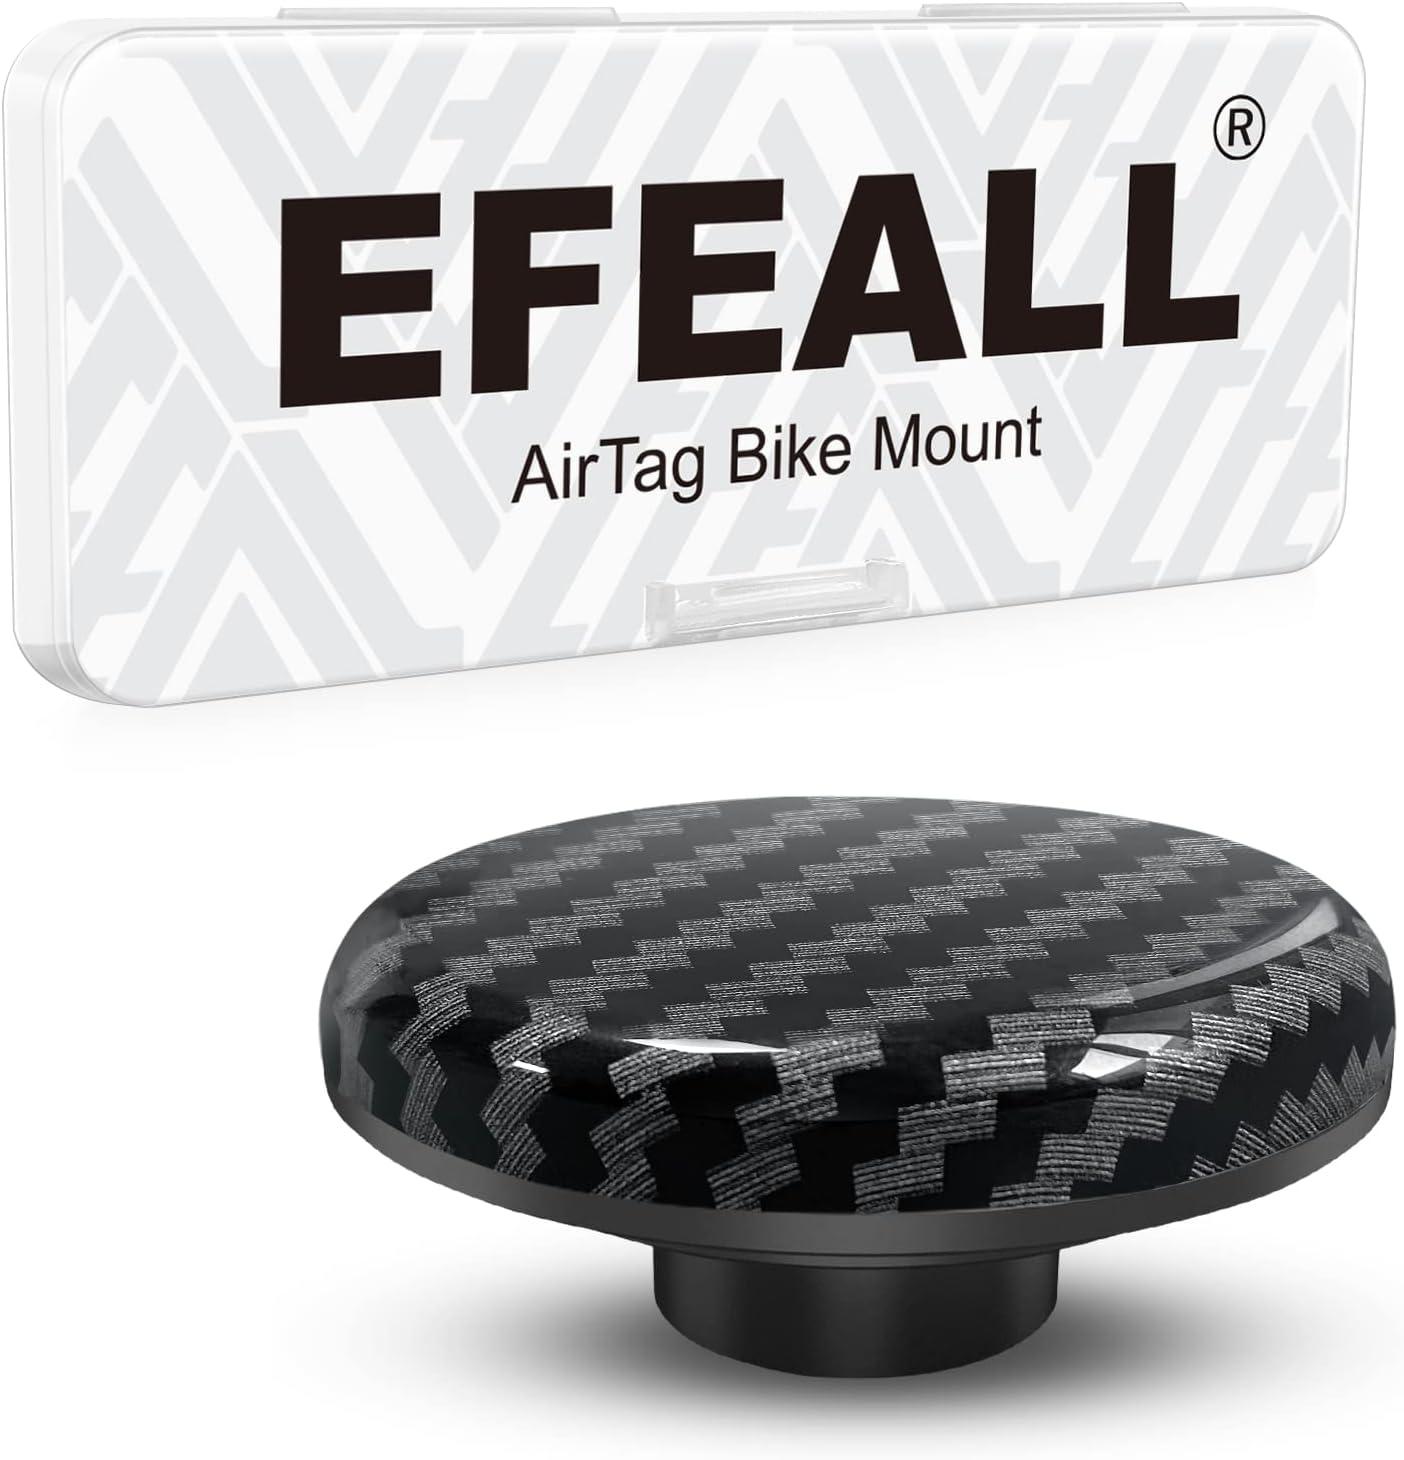  EFEALL AirTag Bike Mount for Air Tag, Anti-Theft